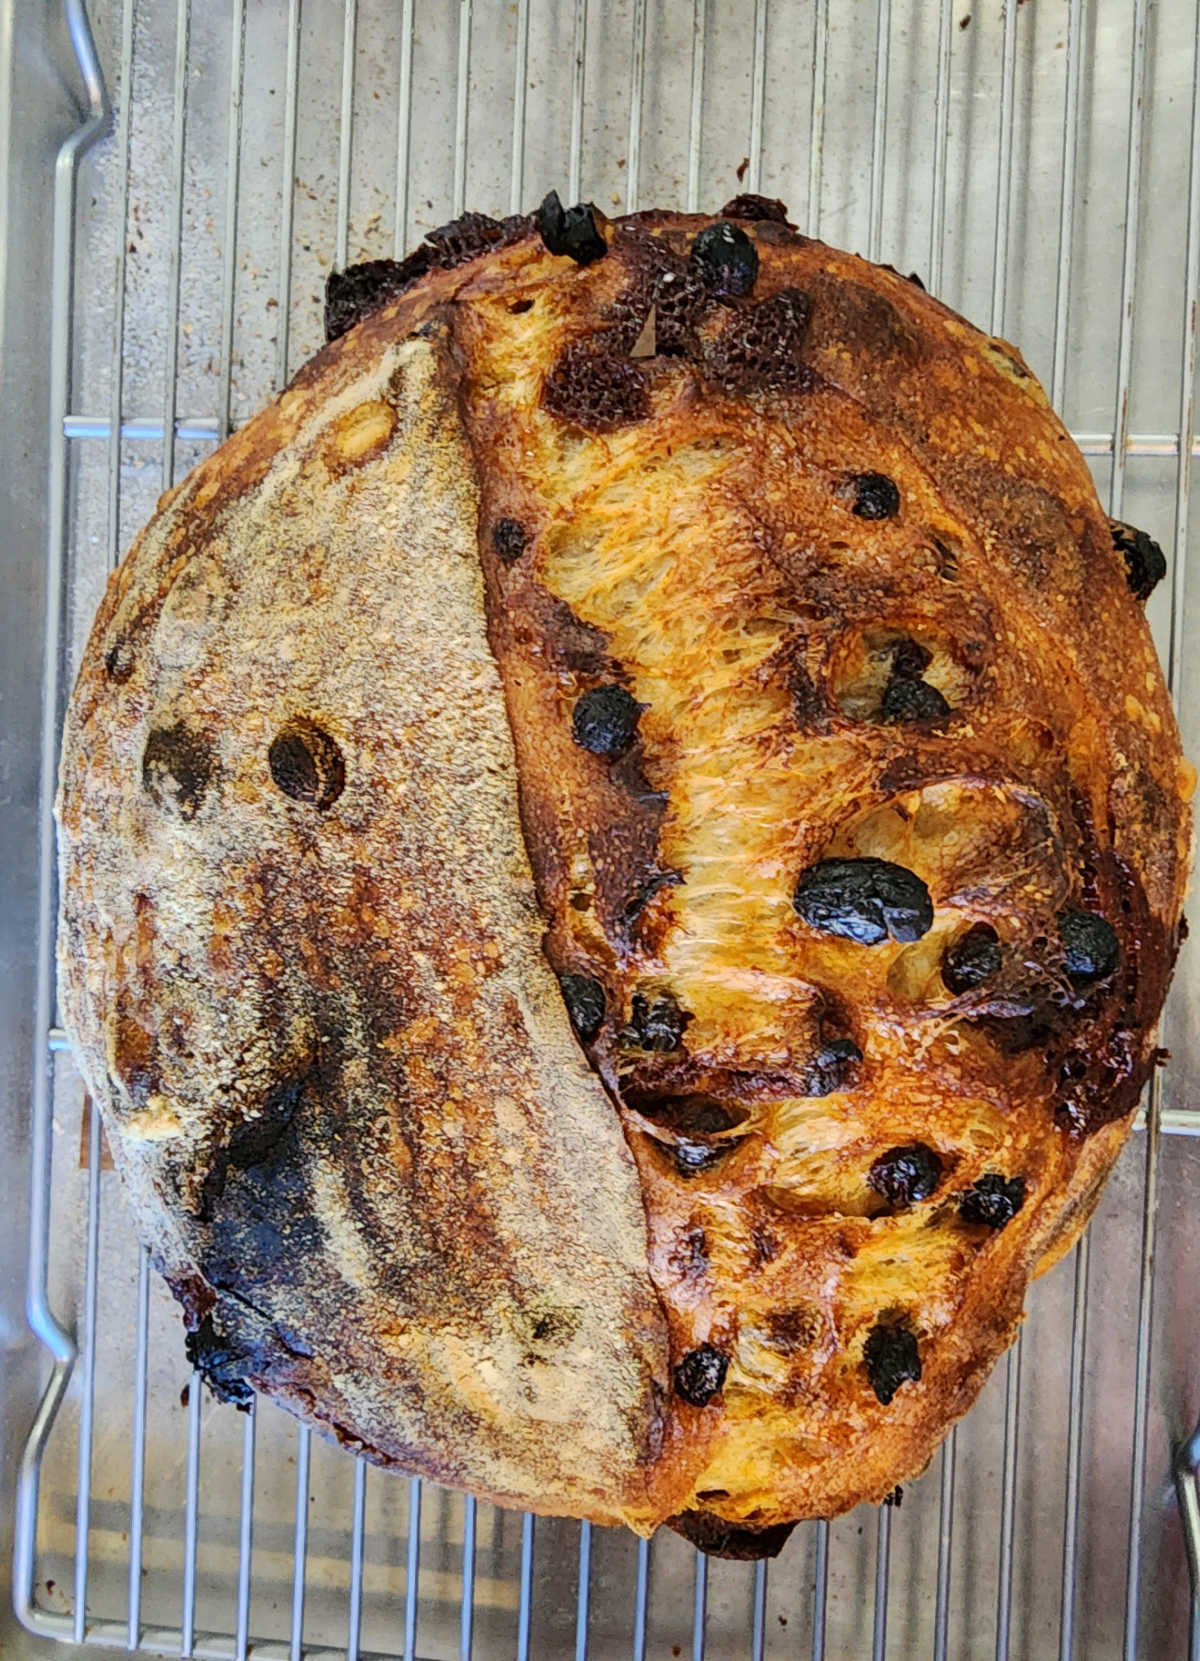 Cinnamon raisin sourdough loaf on metal baking rack.